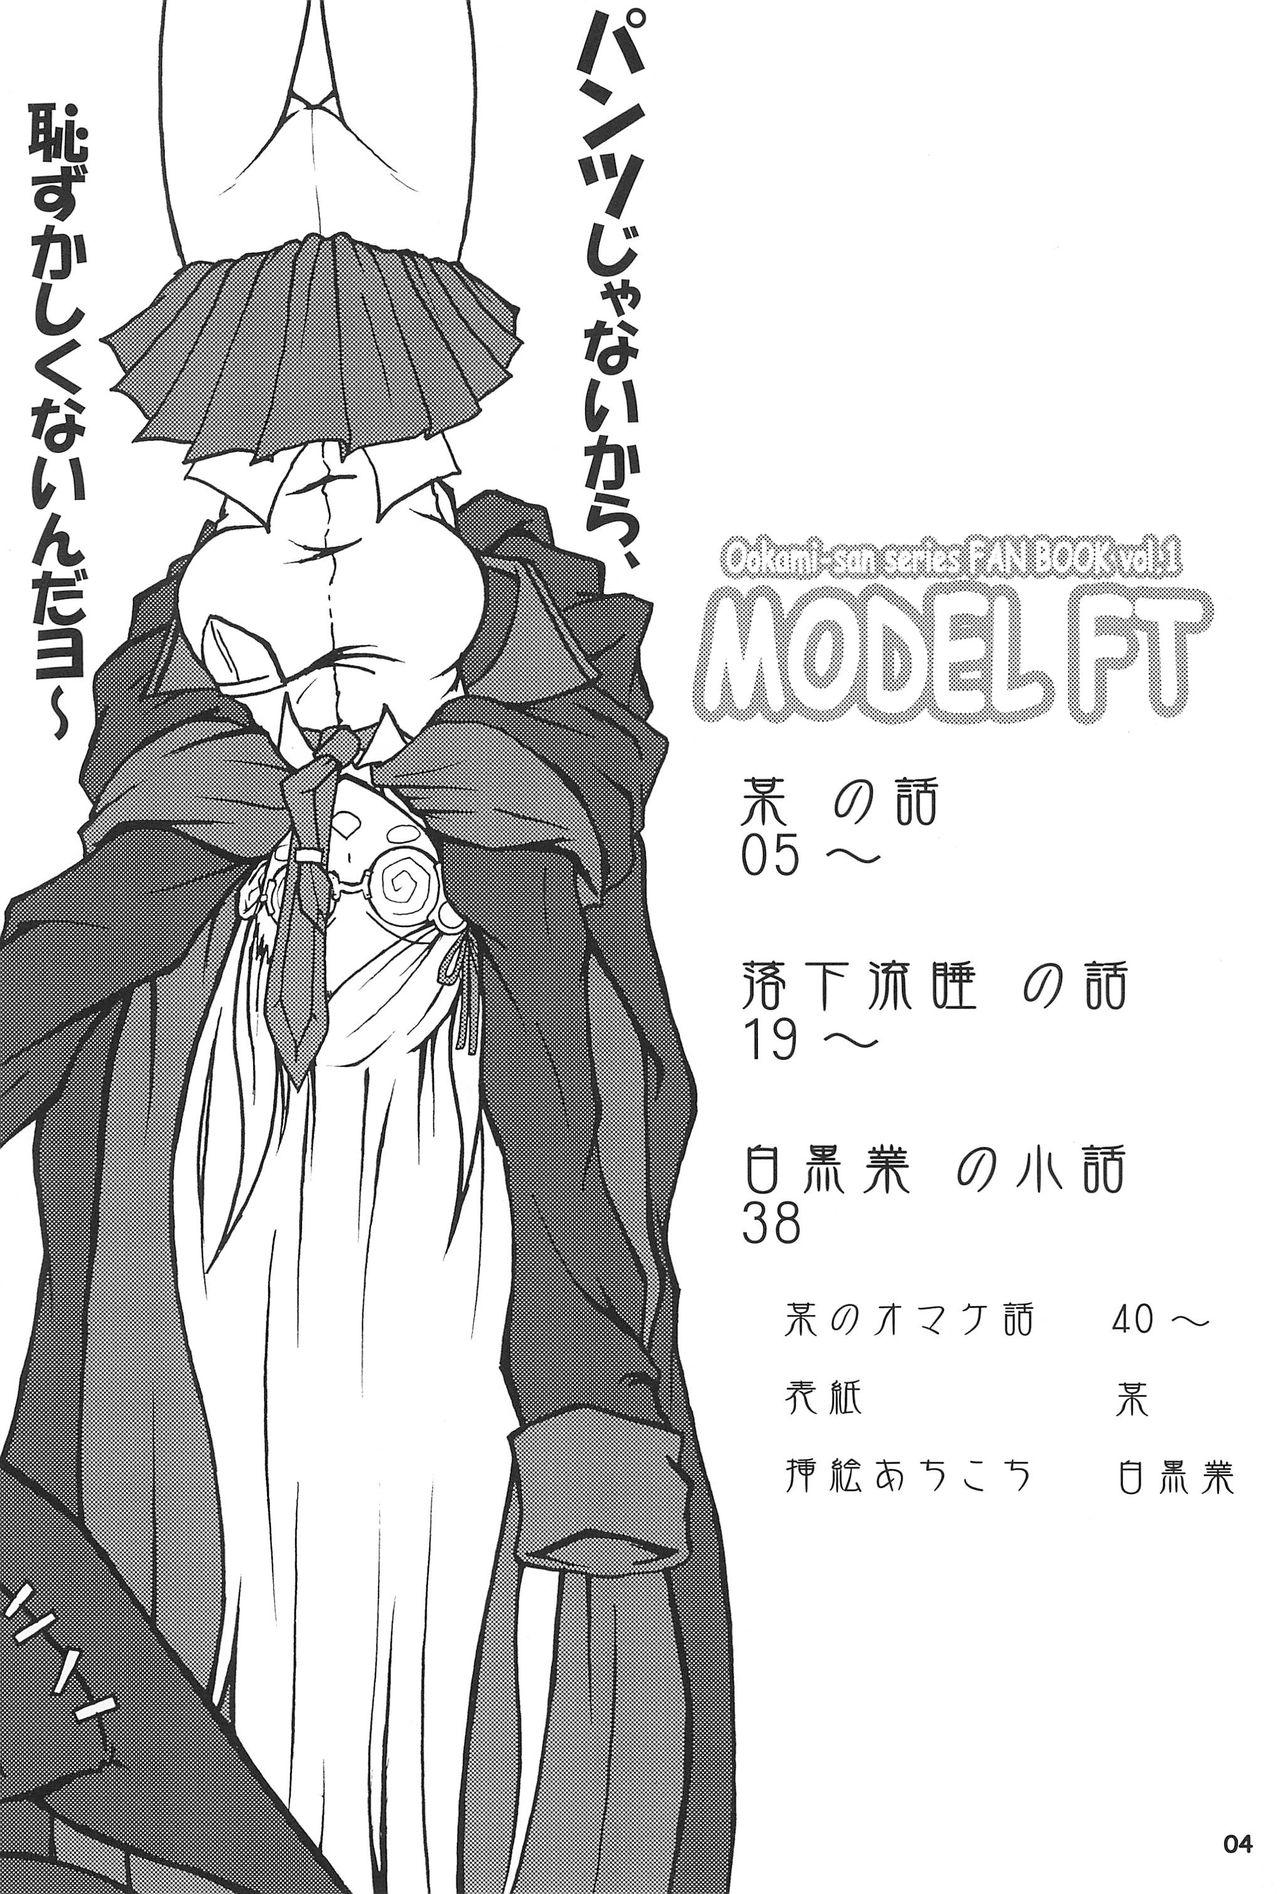 Club MODEL FT - Ookami-san to shichinin no nakama-tachi Interacial - Page 4